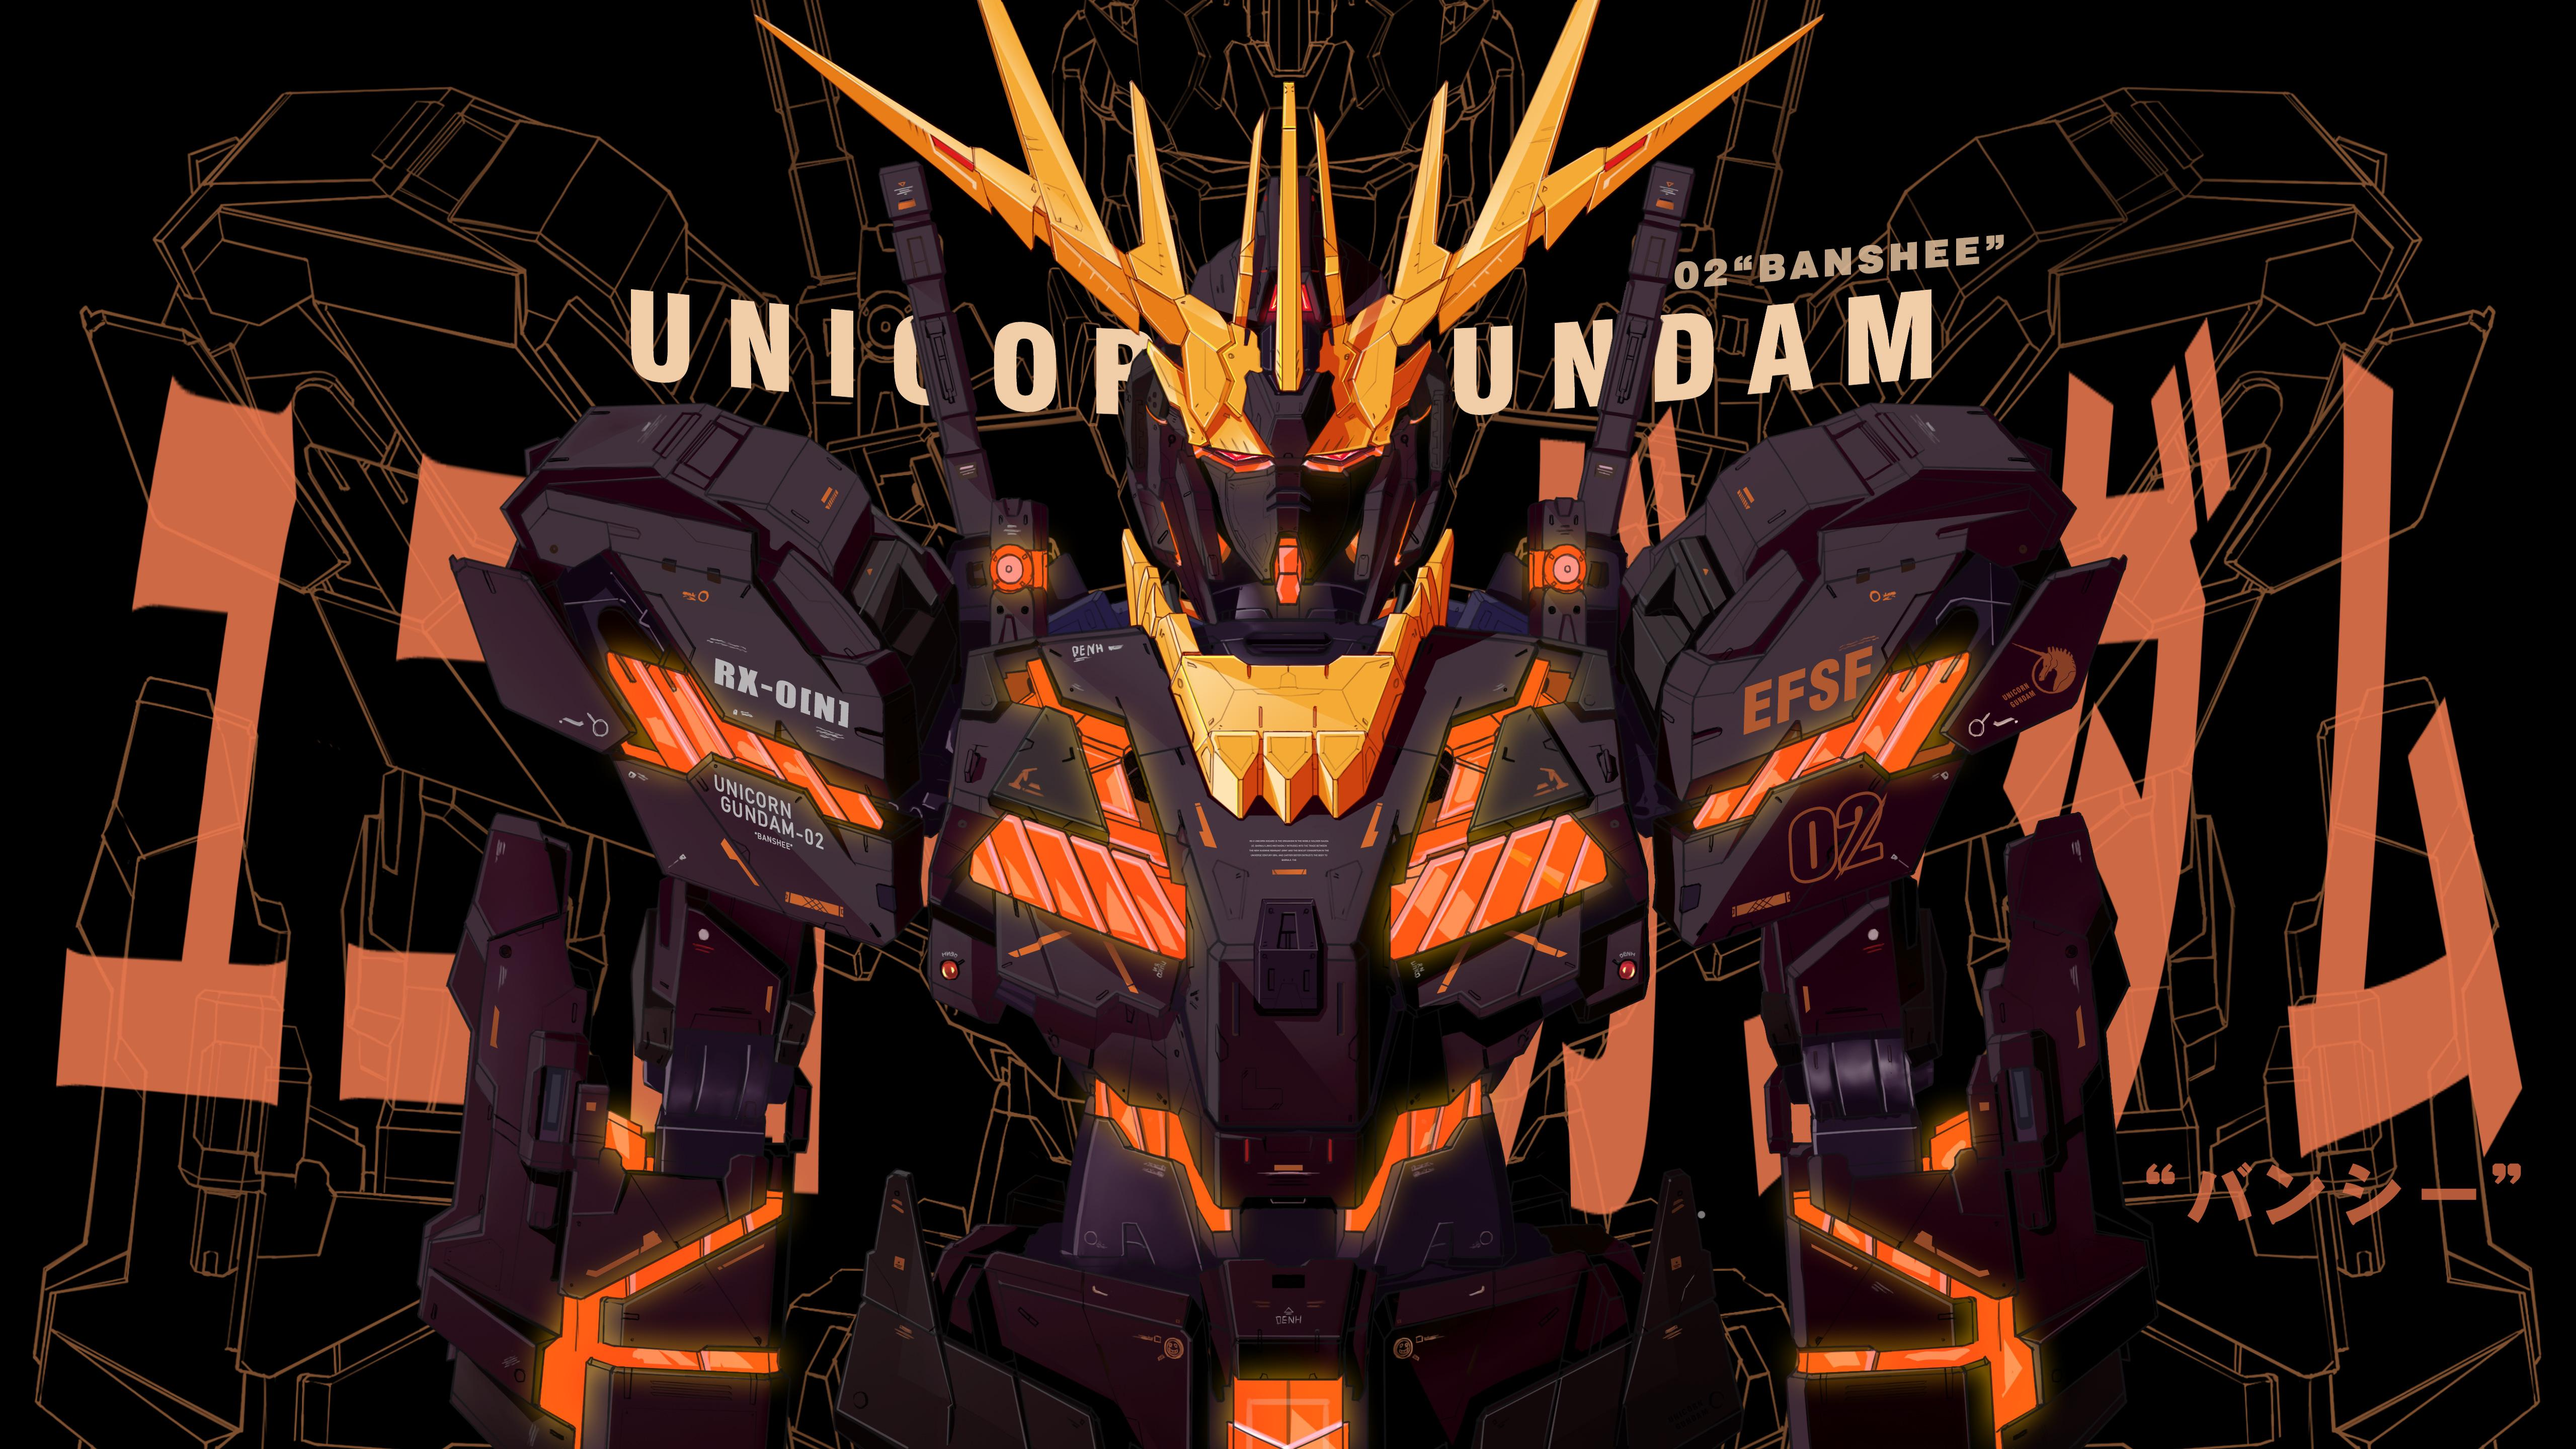 Anime 5120x2880 Games posters Mobile Suit Gundam Japanese Banshee Norn Mobile Suit Gundam Unicorn Gundam kanji text